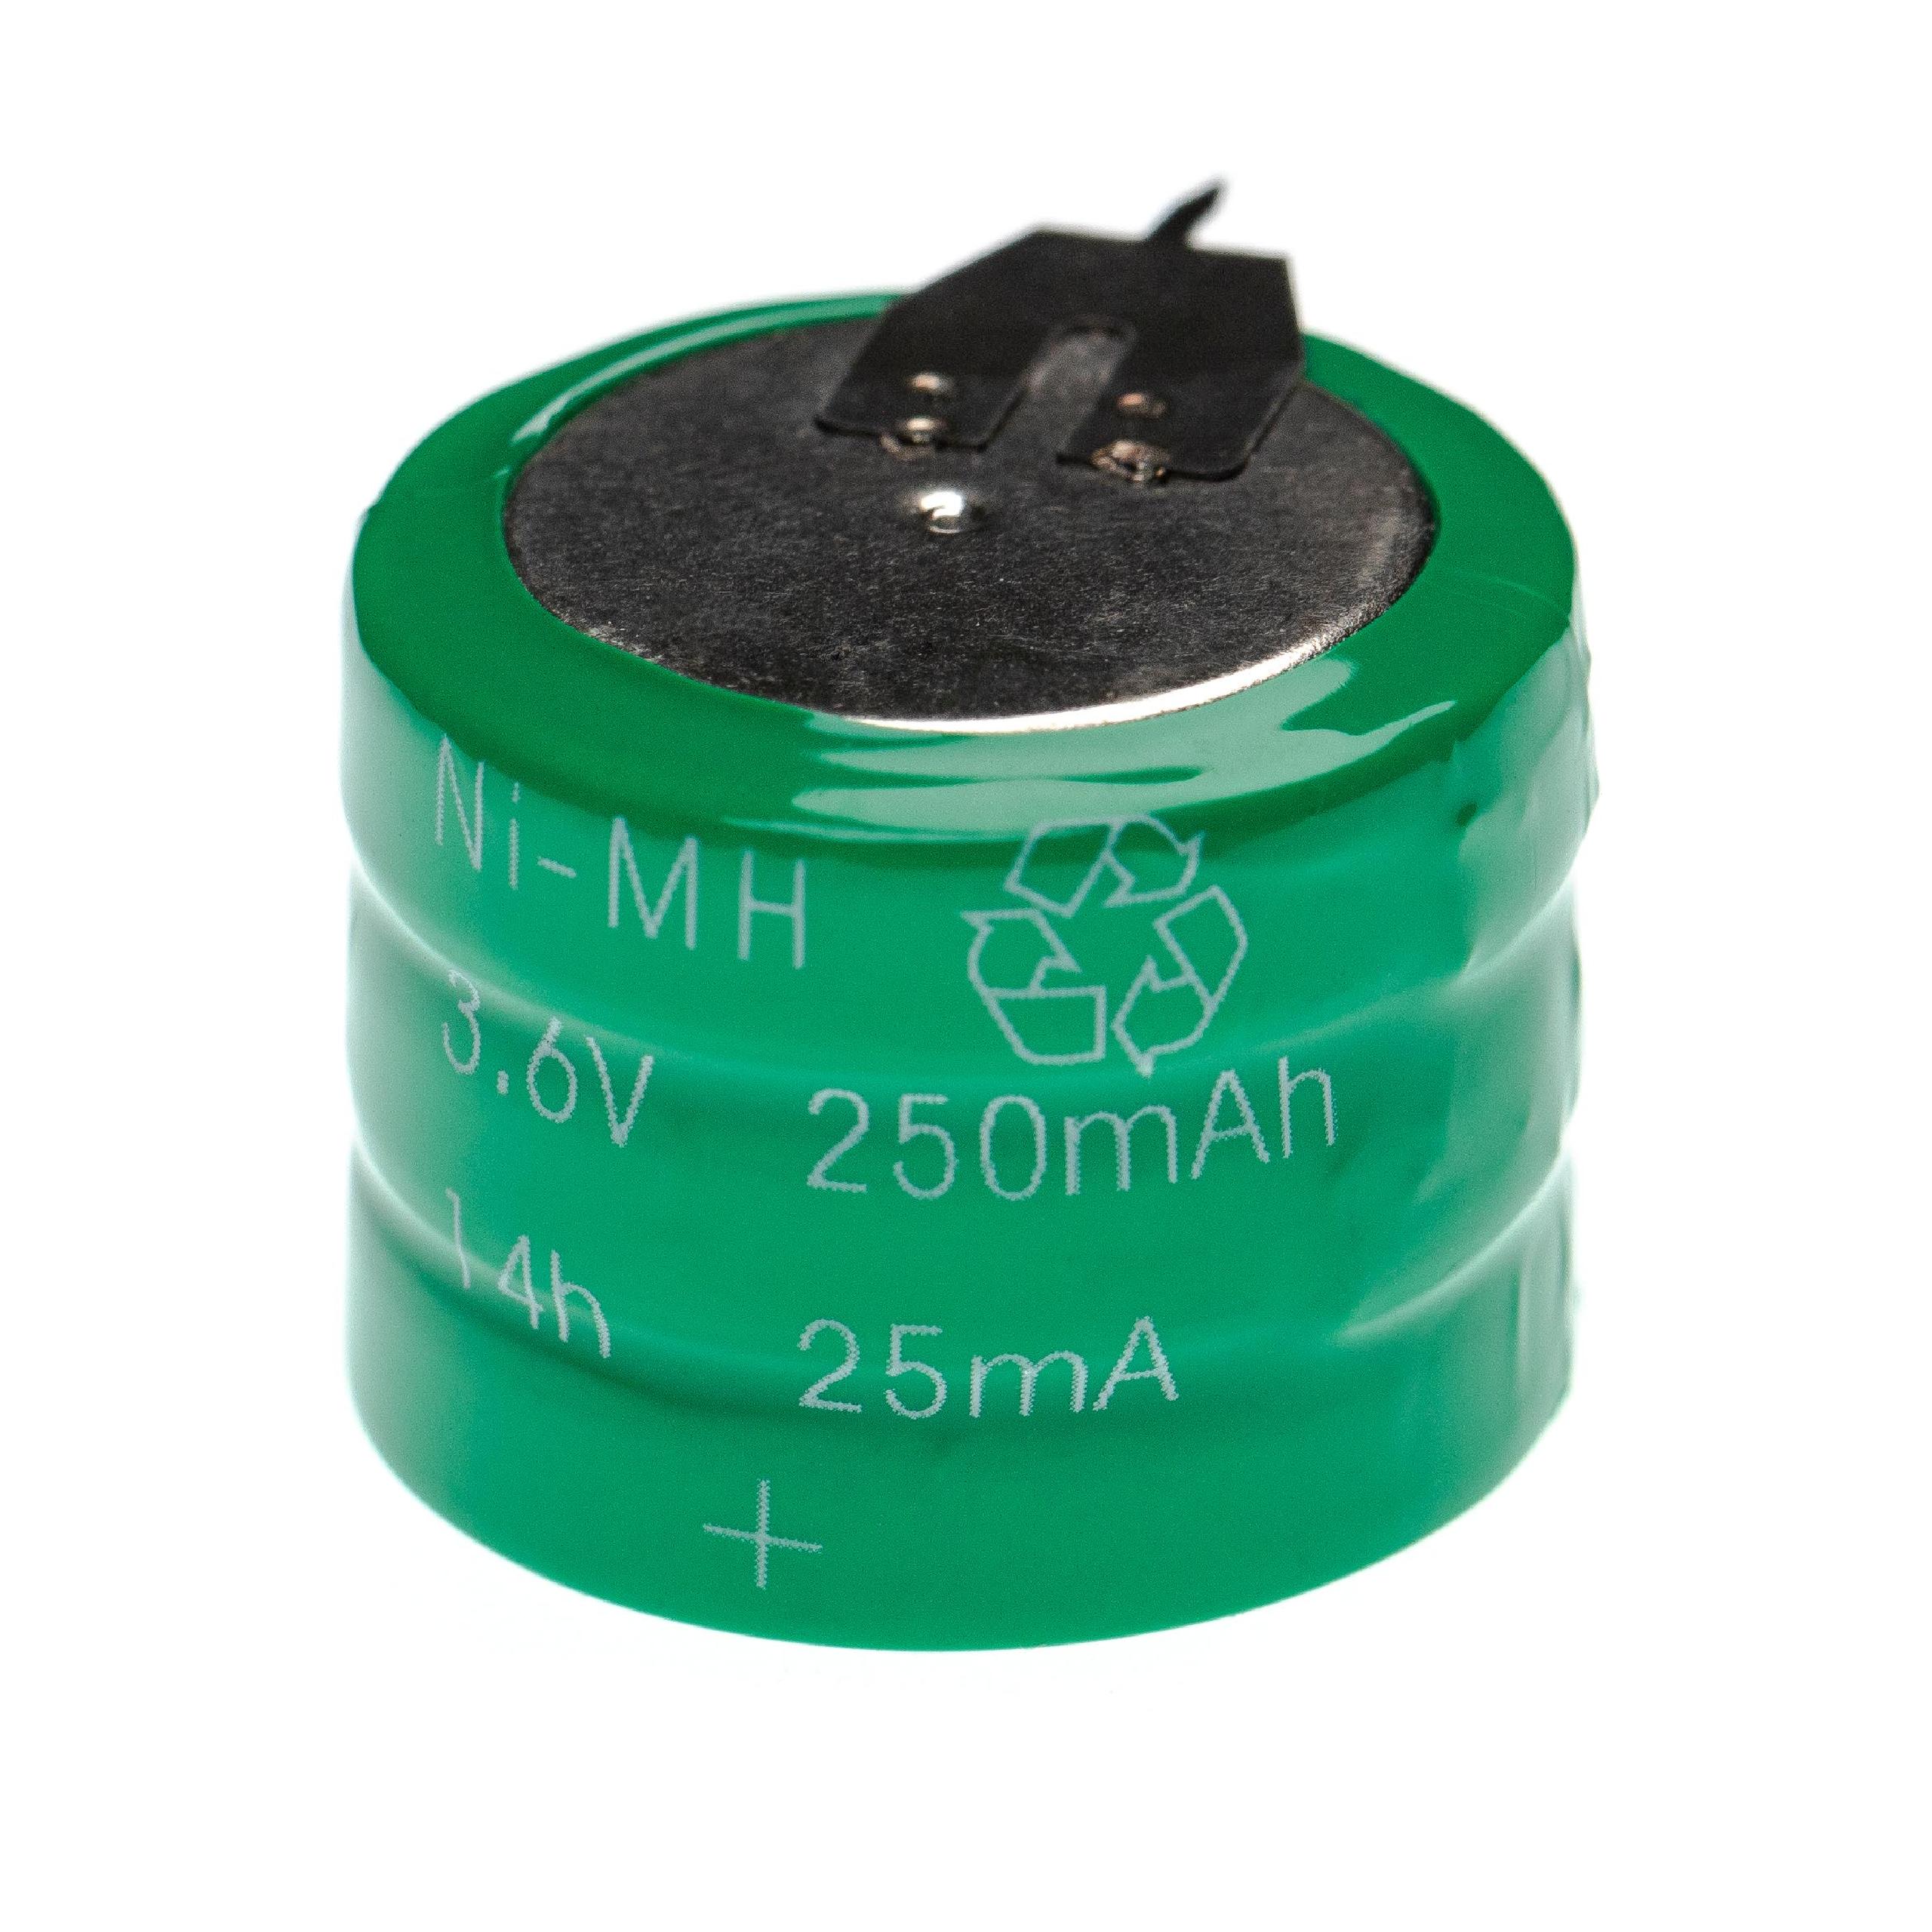 Button Cell Battery (3x Cell) Type V250H for Model Building Solar Lamps etc. - 250mAh 3.6V NiMH